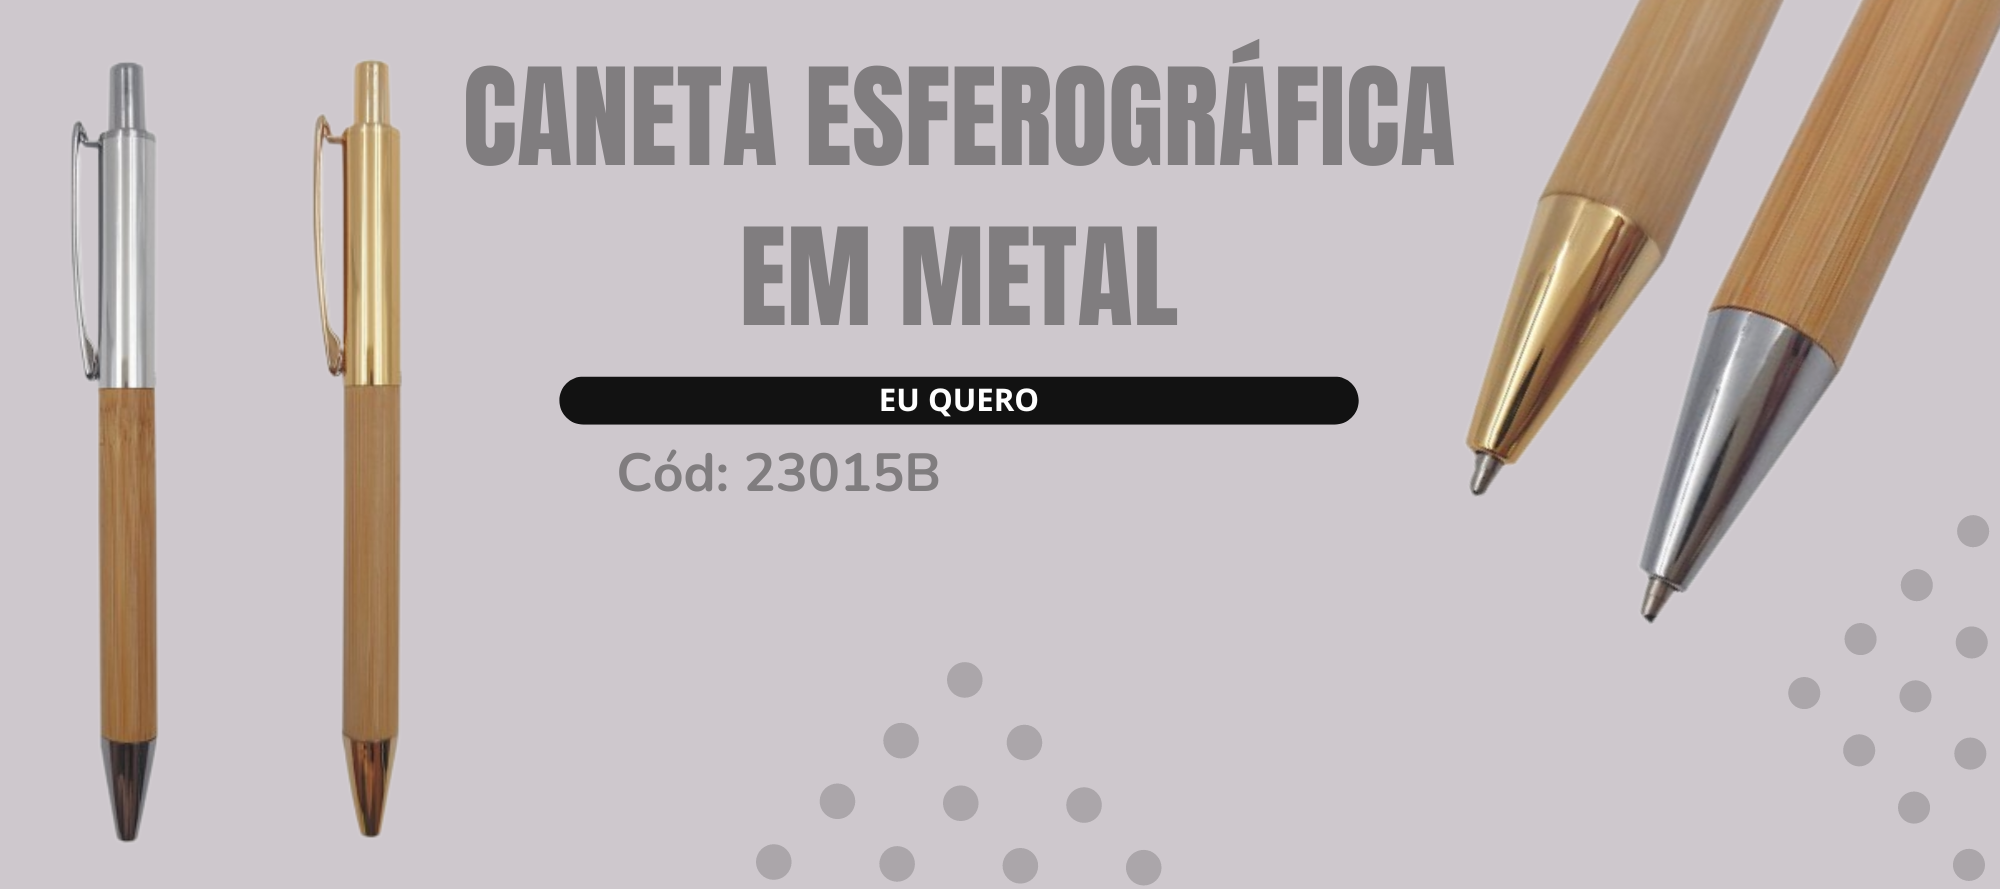 CANETA ESFEROGRAFICA DE METAL